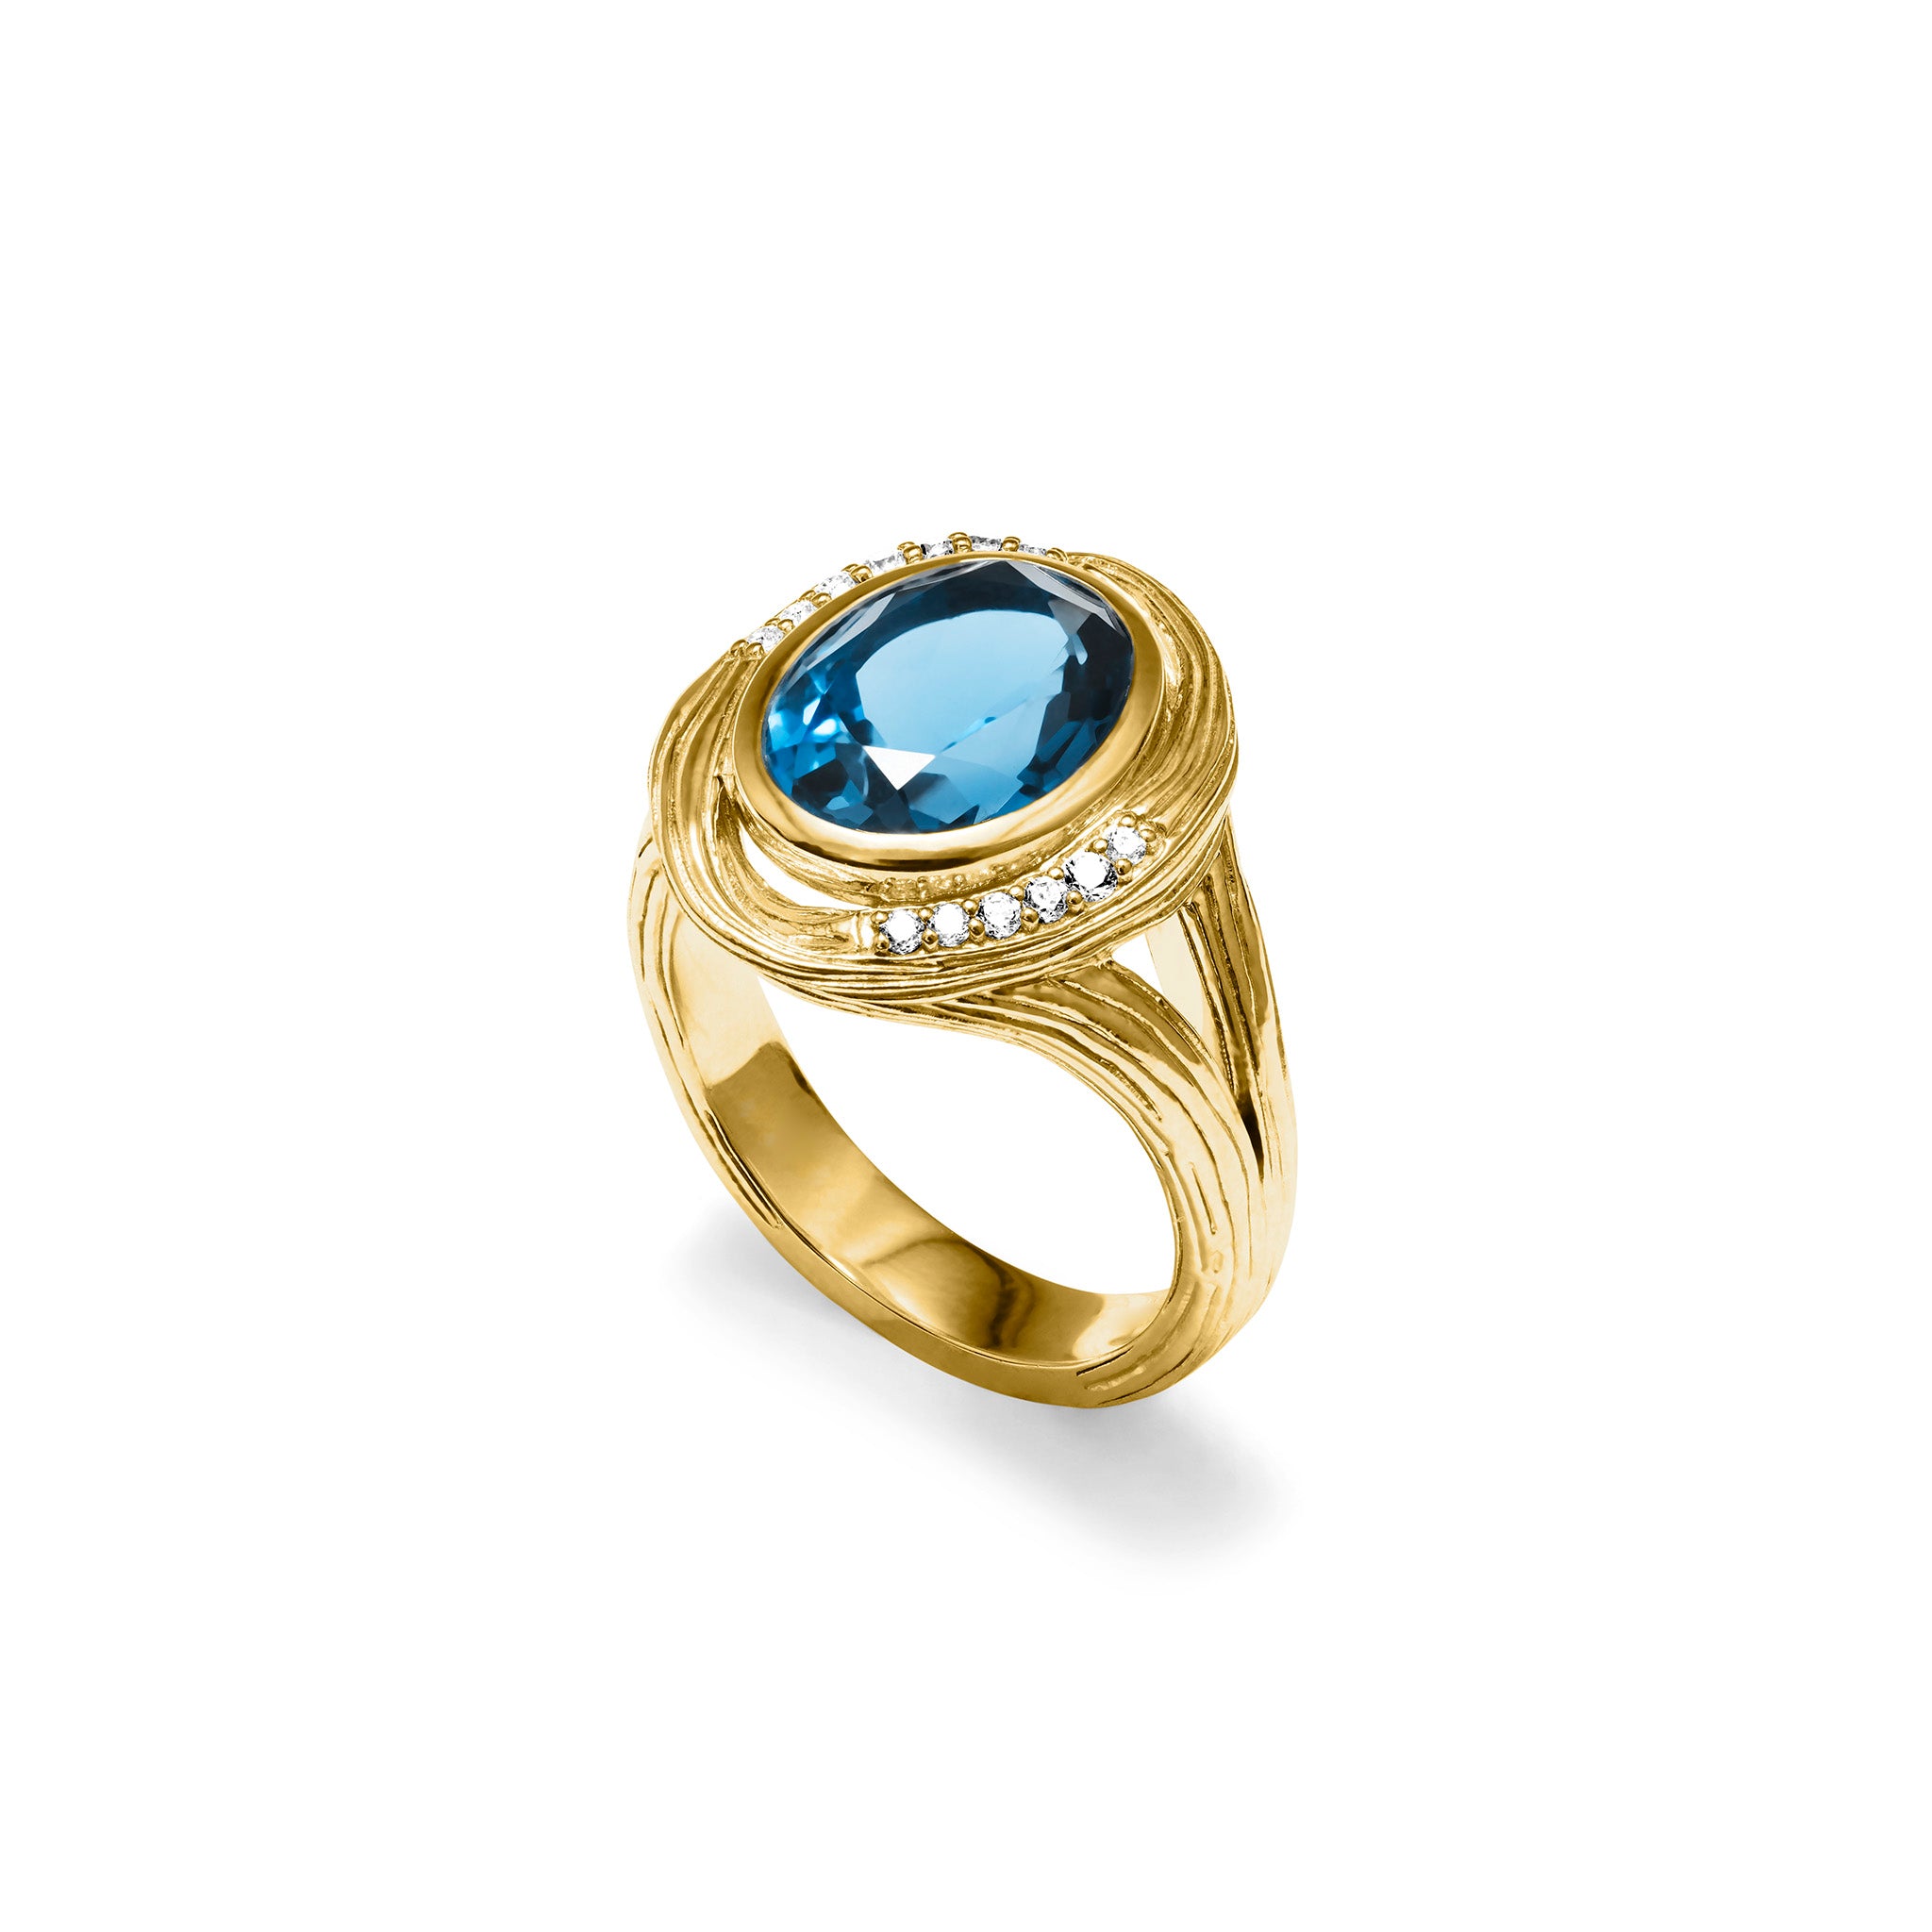 Santorini Oval Ring with London Blue Topaz and Diamonds in 18K